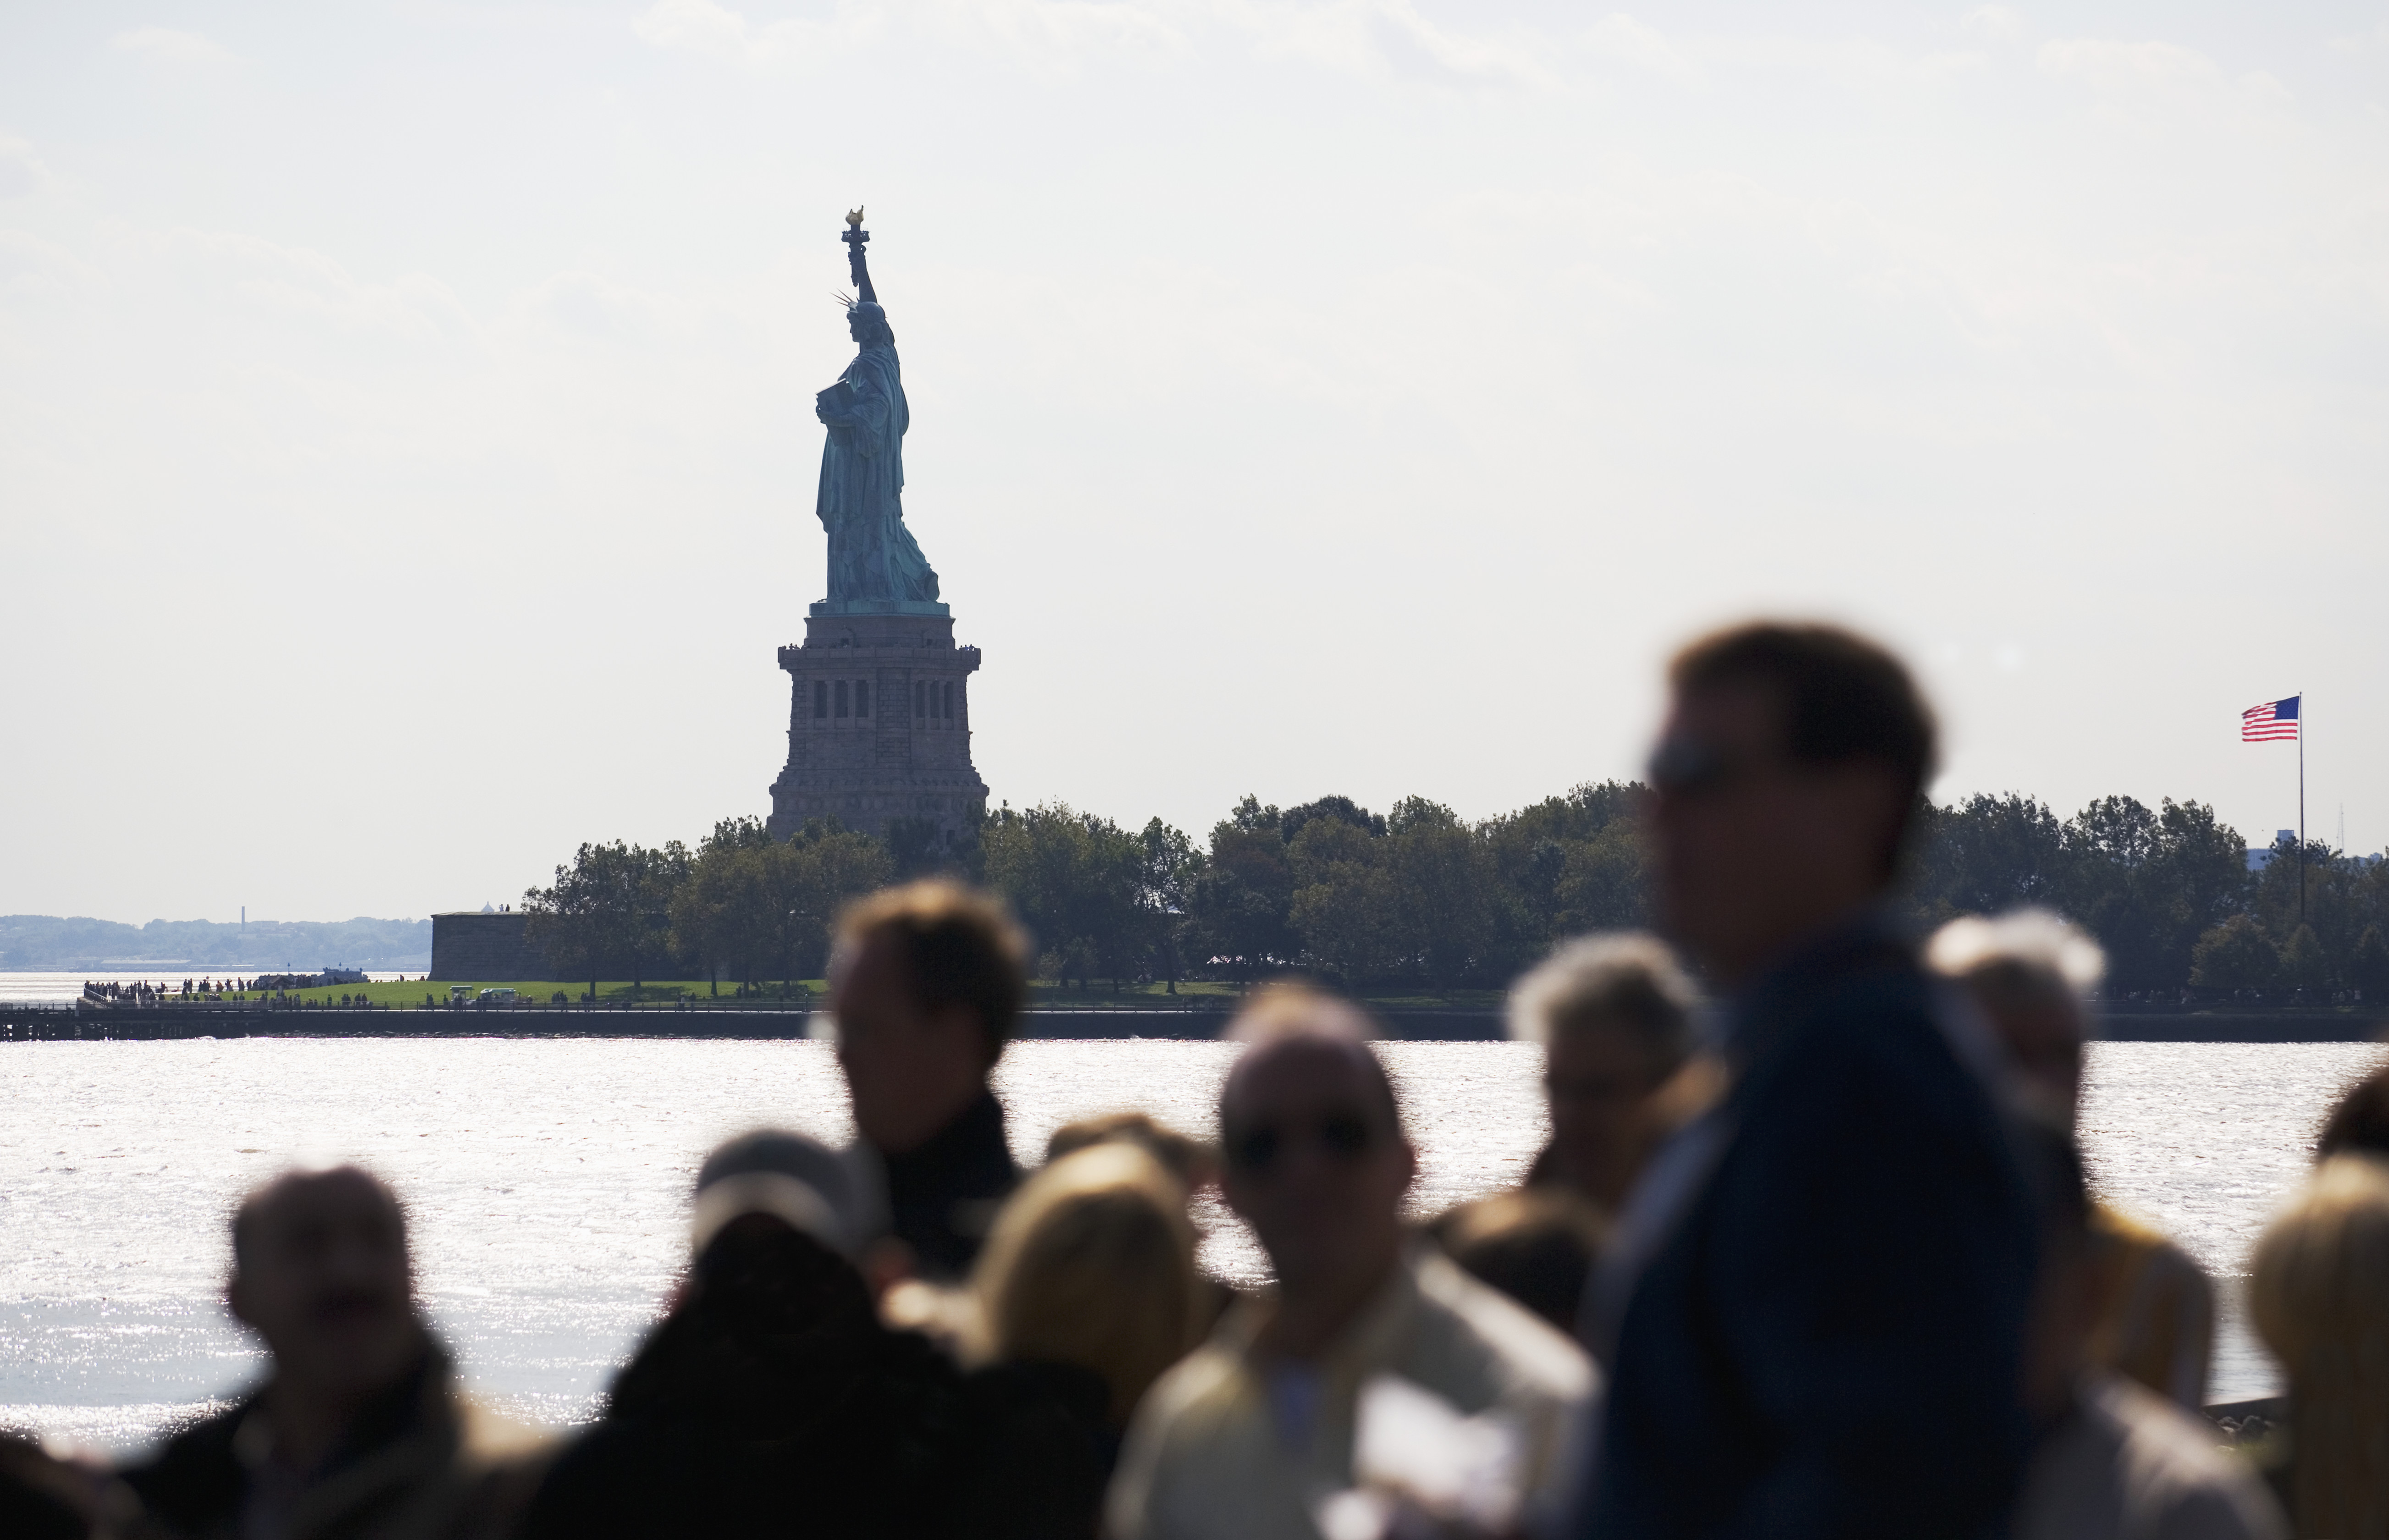 people-on-boat-near-statue-of-liberty - Immigration: Ellis Island ...